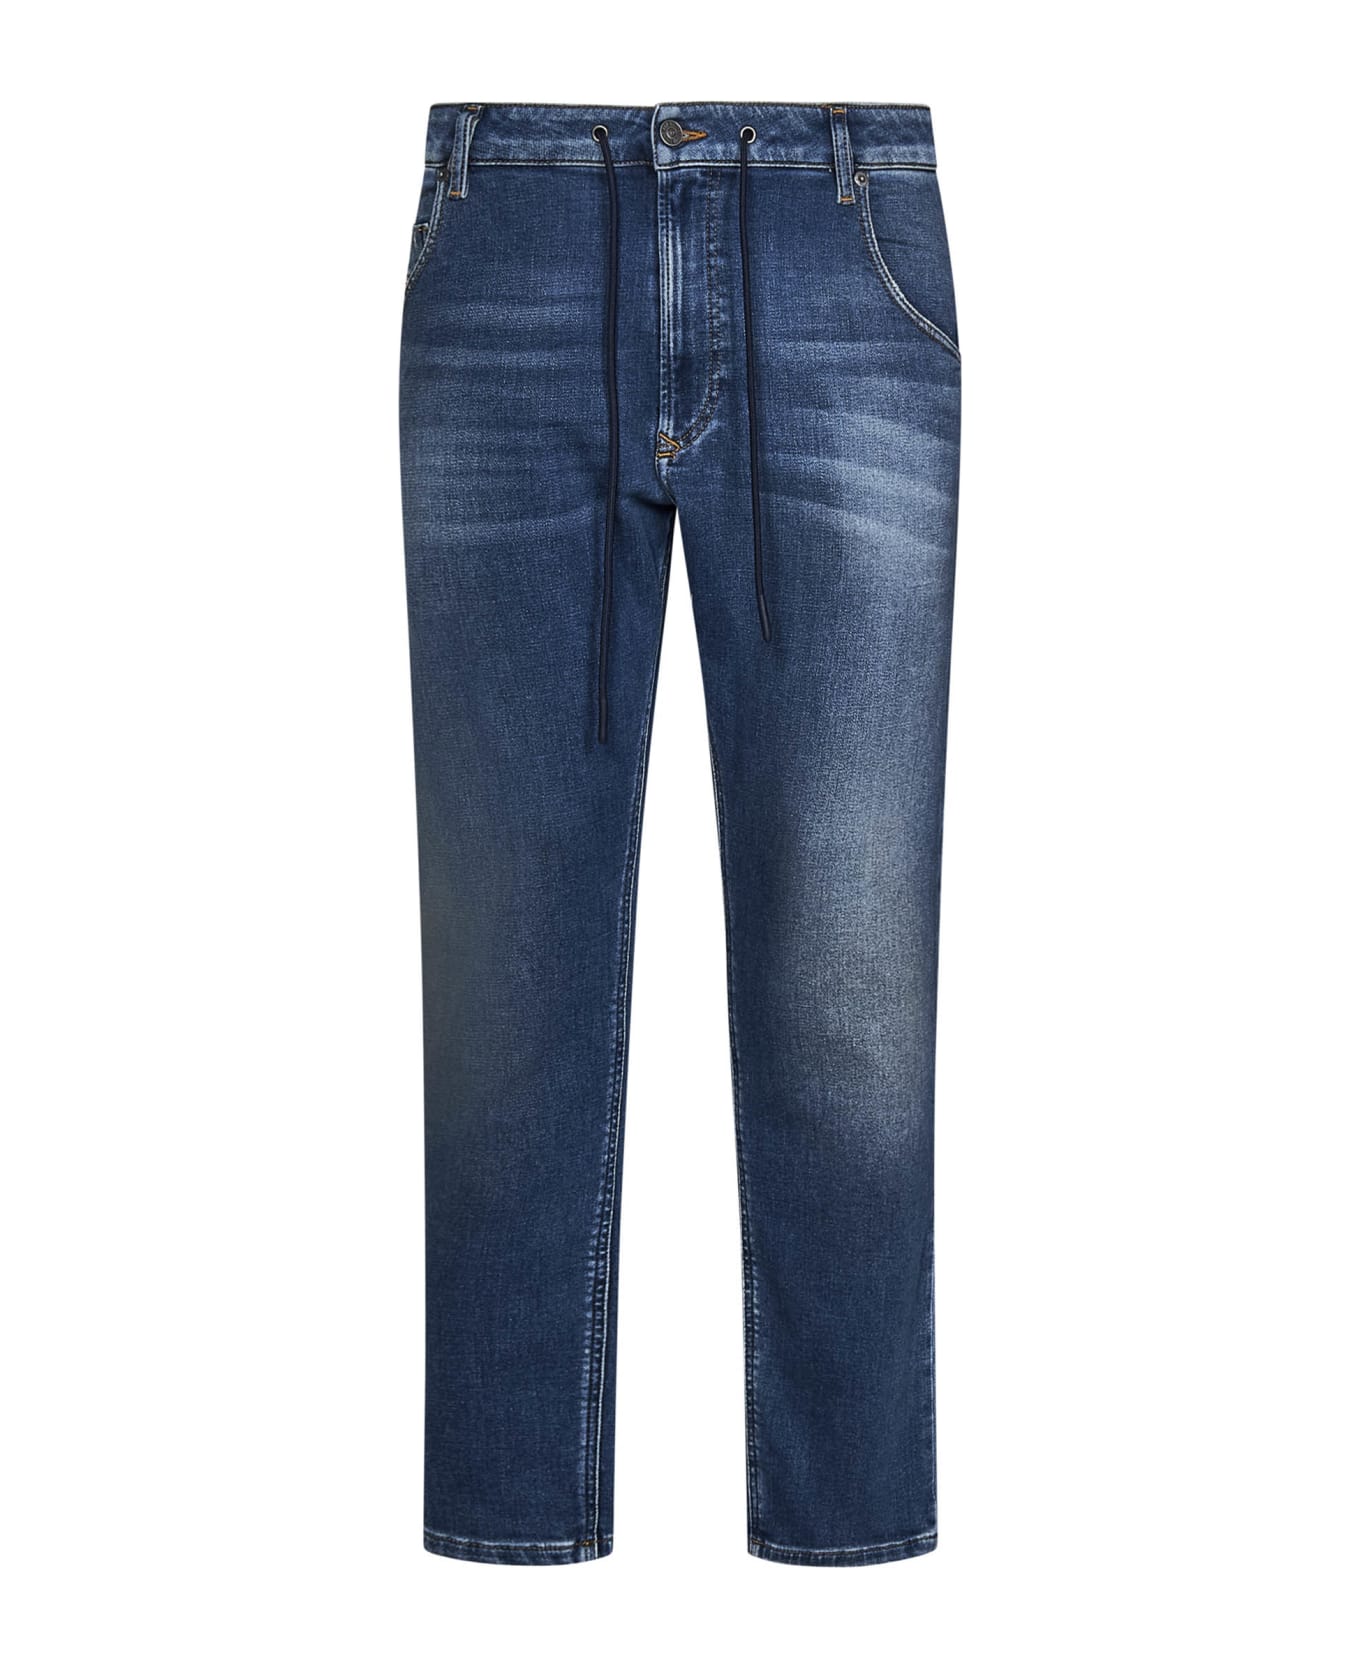 Diesel Krooley Joggjeans® 068cx Tapered Jeans - Blue